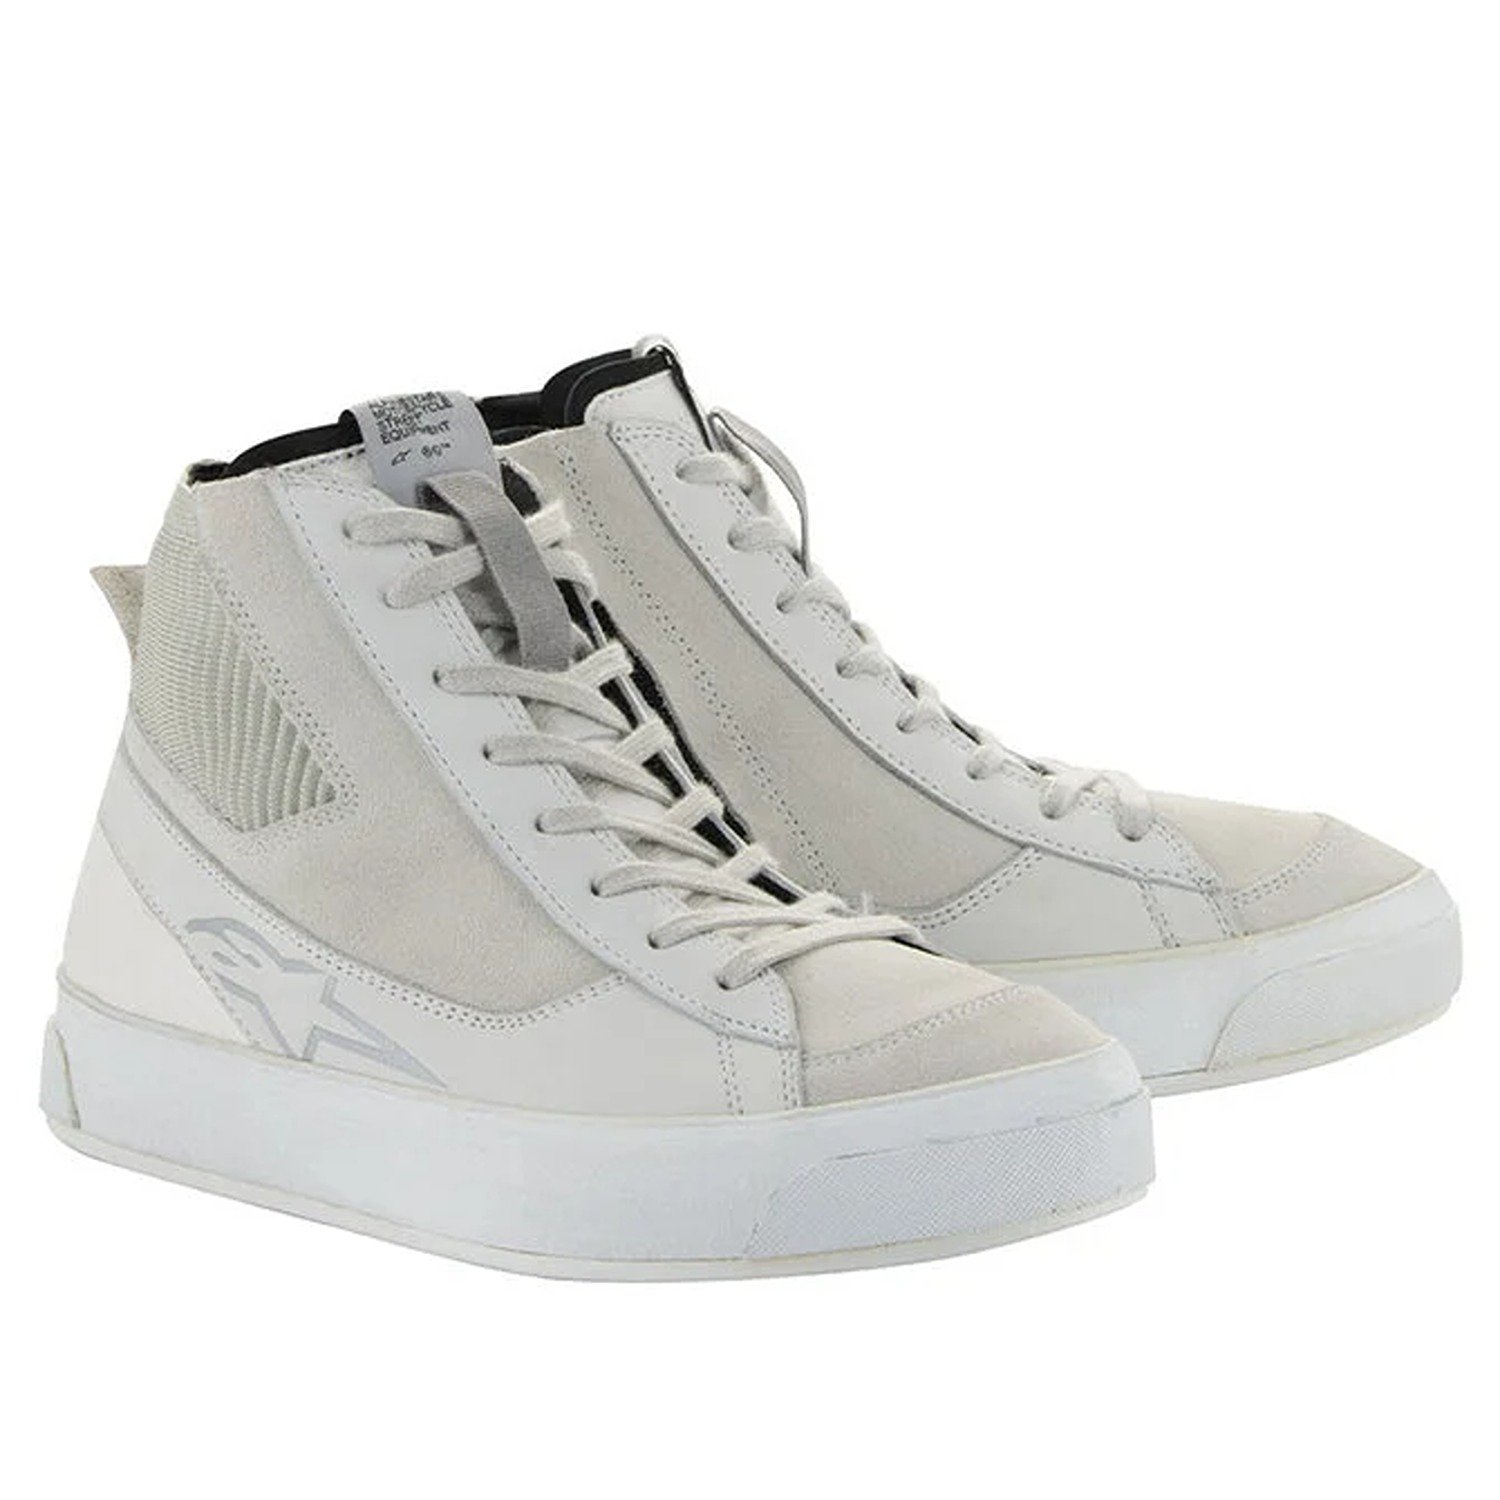 Image of Alpinestars Stella Stated Podium Shoes White Cool Gray Talla US 85